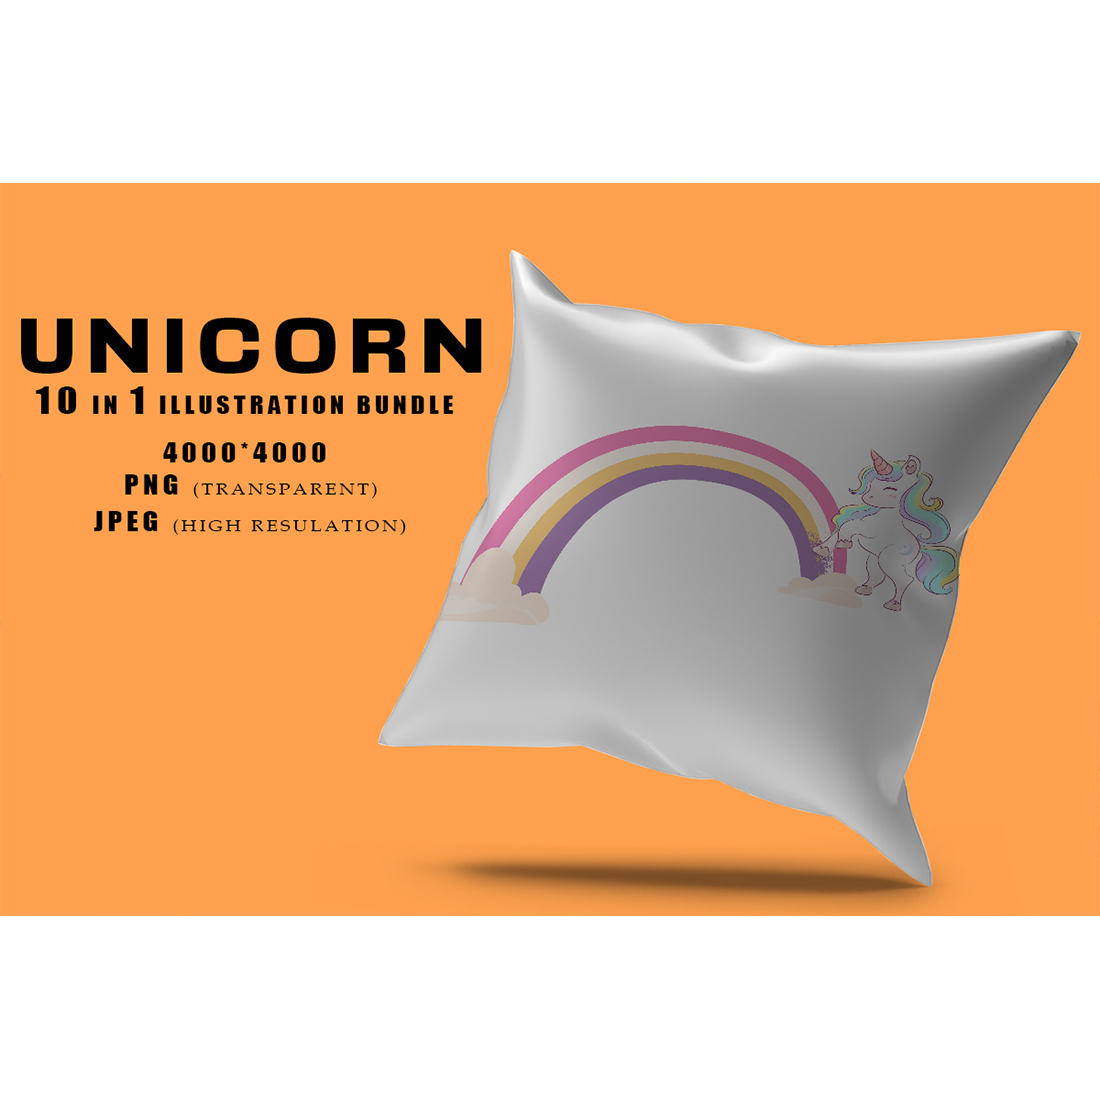 Cushion image with exquisite unicorn print